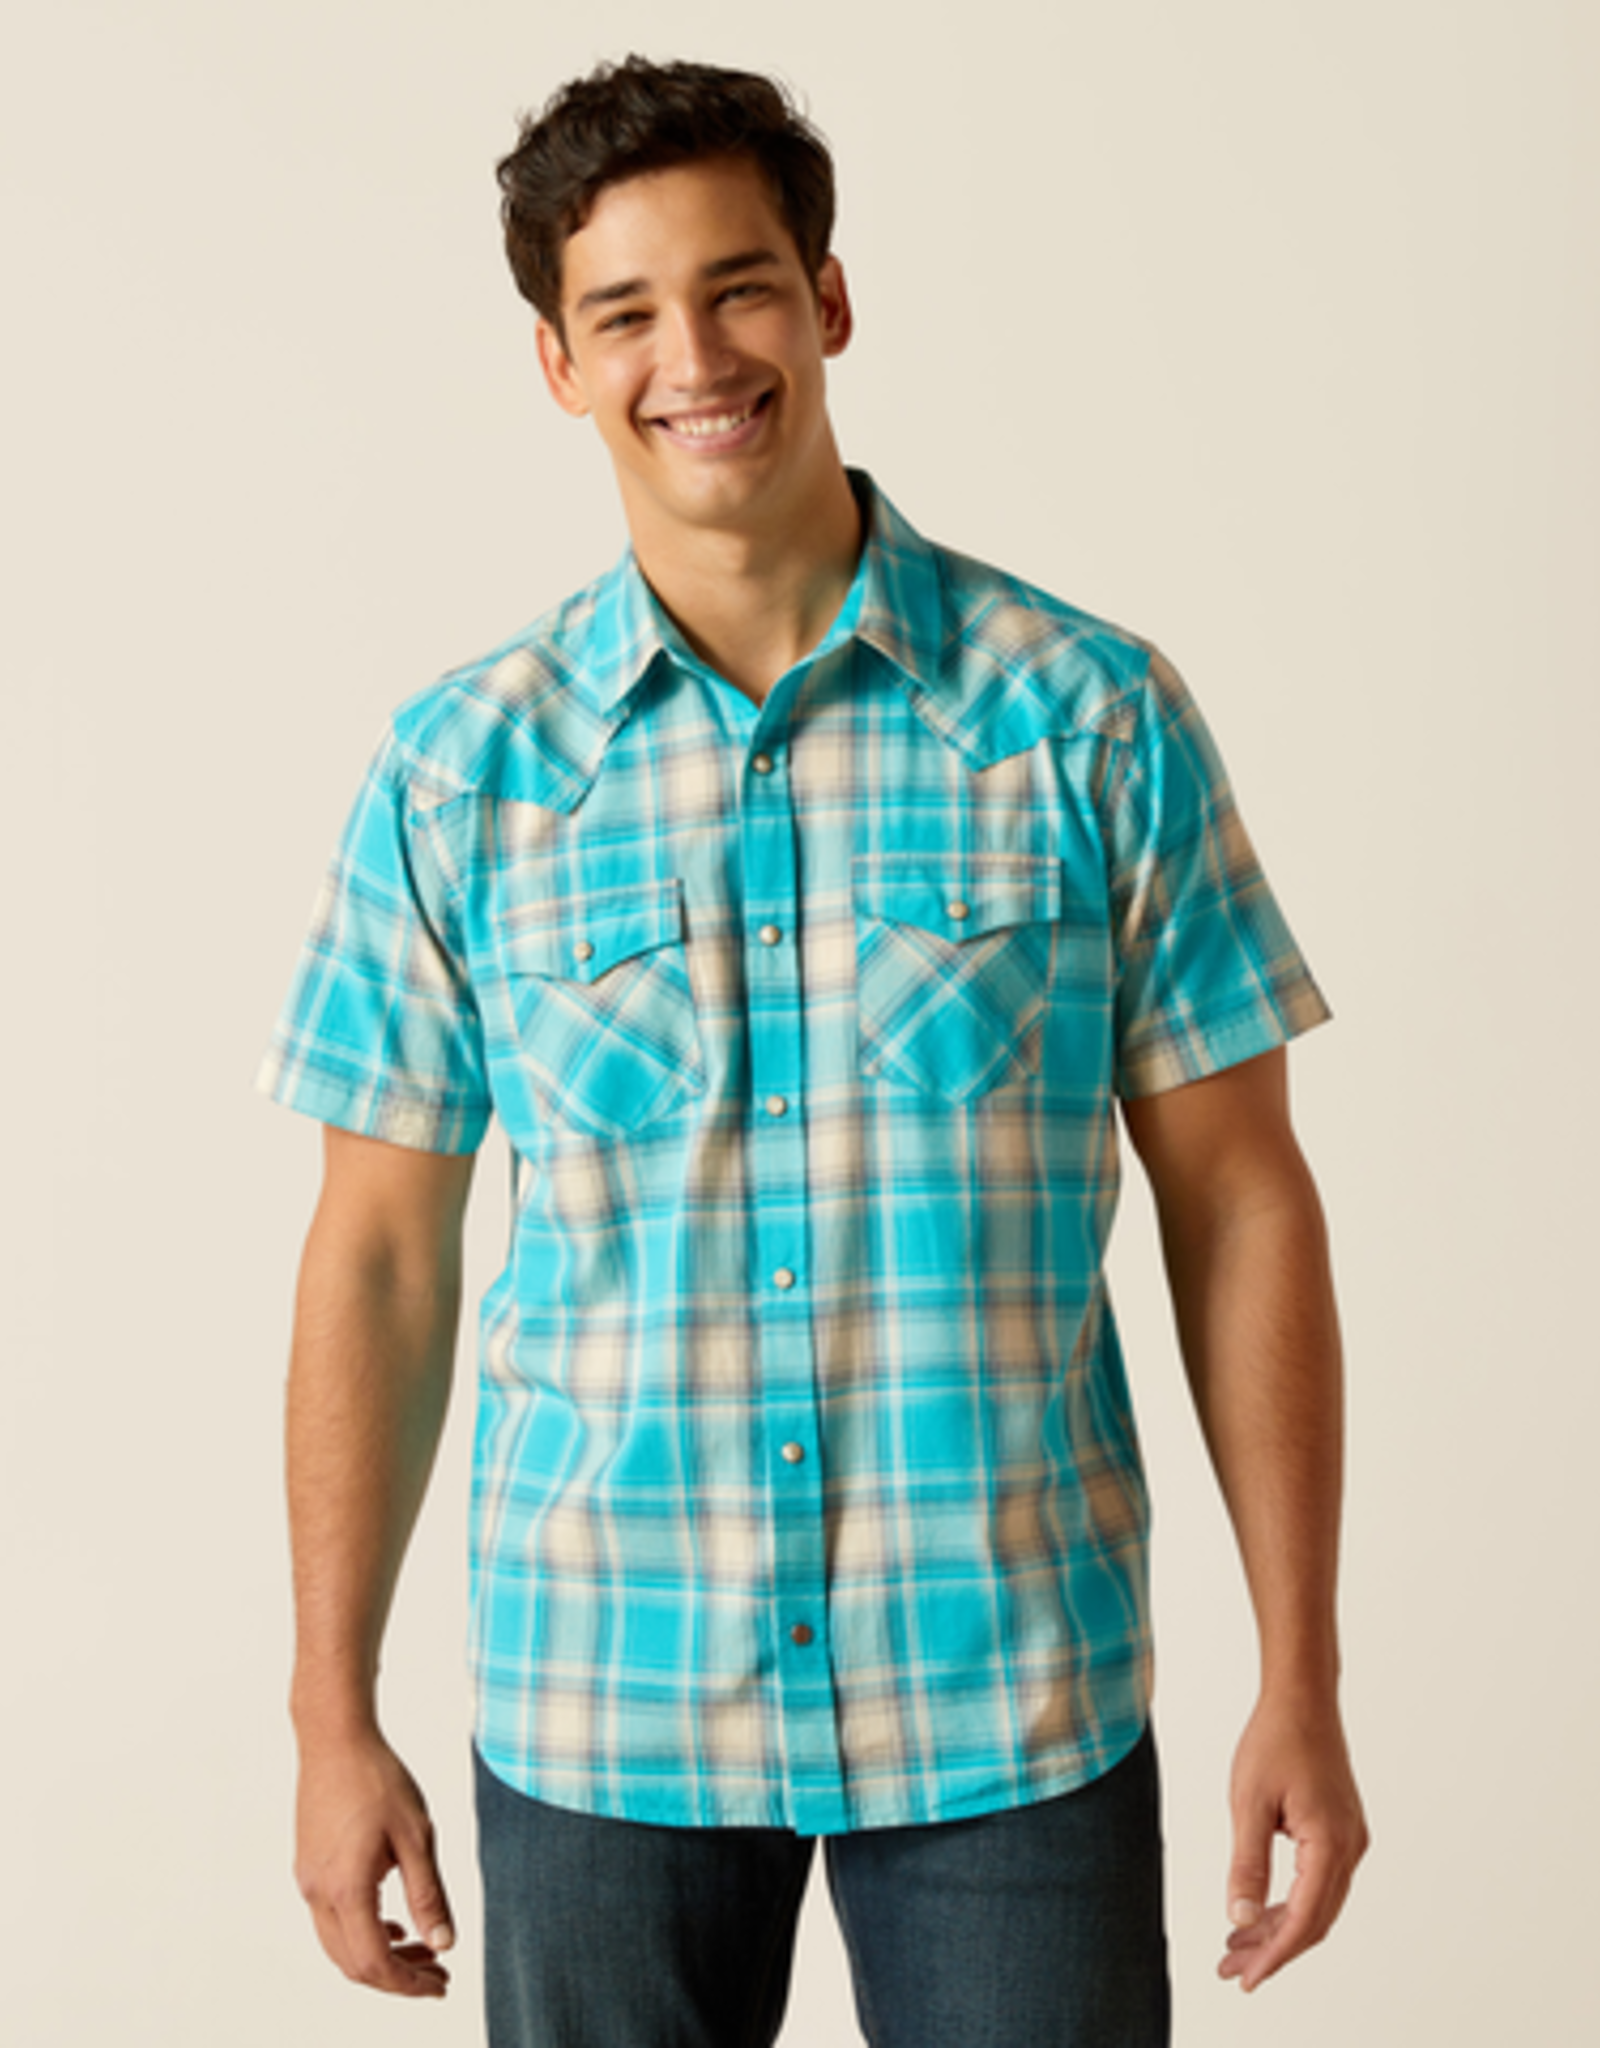 Ariat Mens Ariat Turquoise Plaid Western Retro Short Sleeve Shirt M-3X